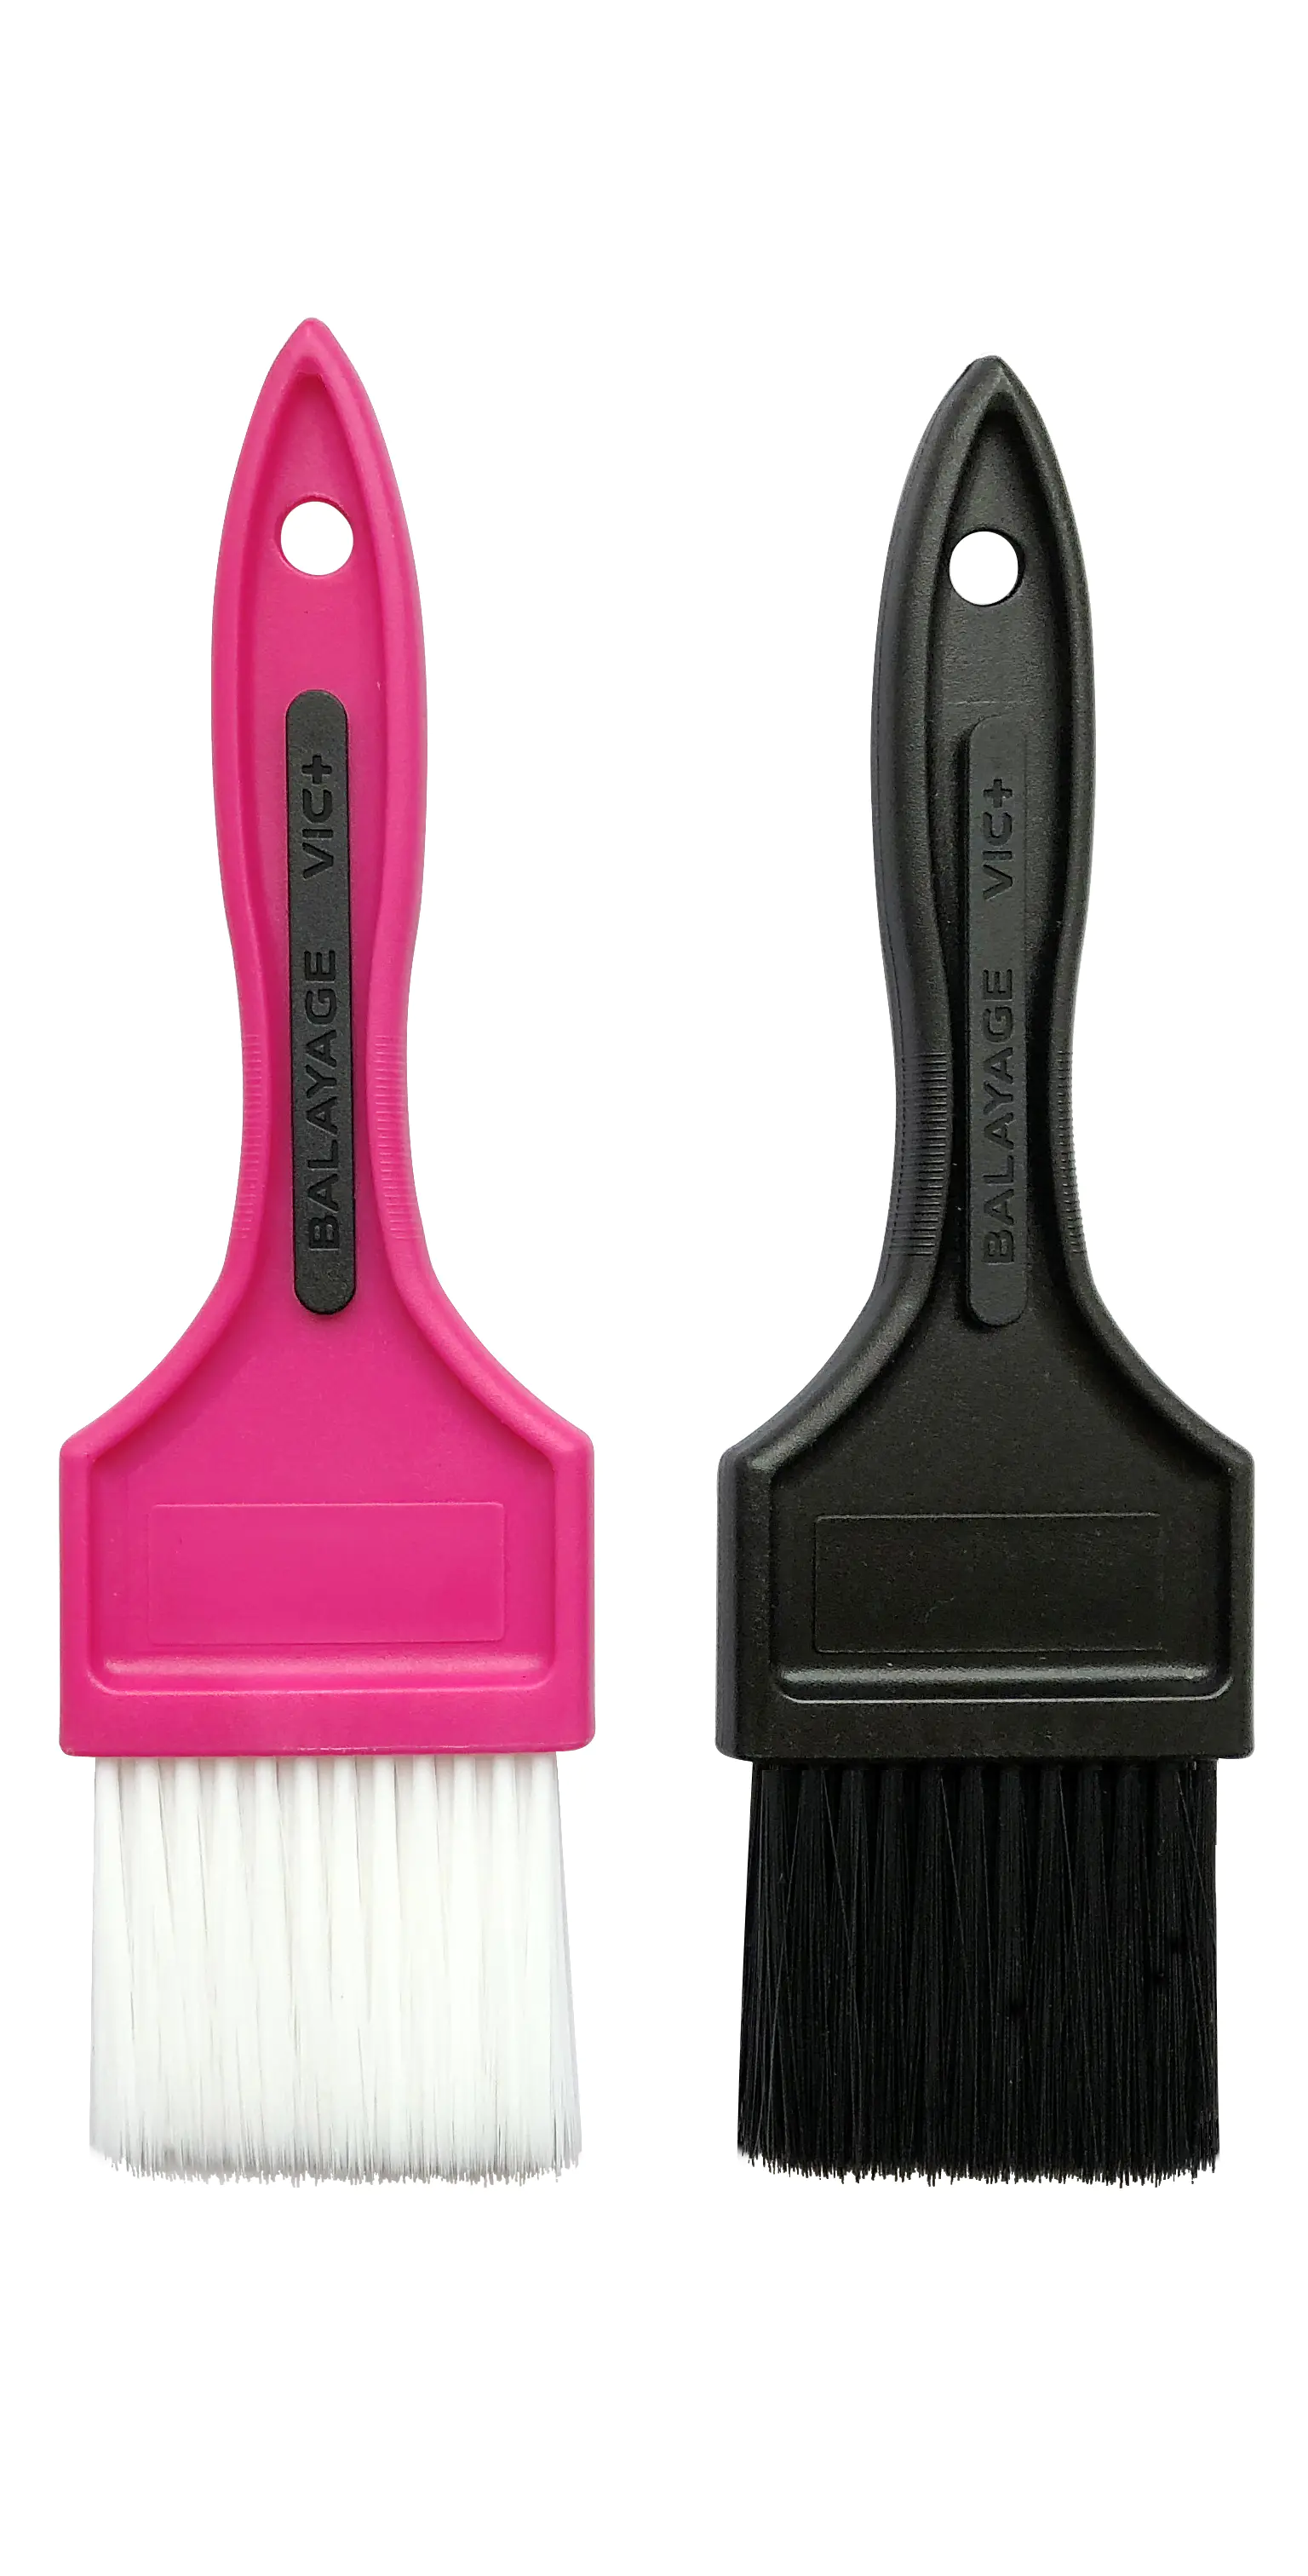 OEM professional salon hair coloring brush plastic hair dye brush tinting brush